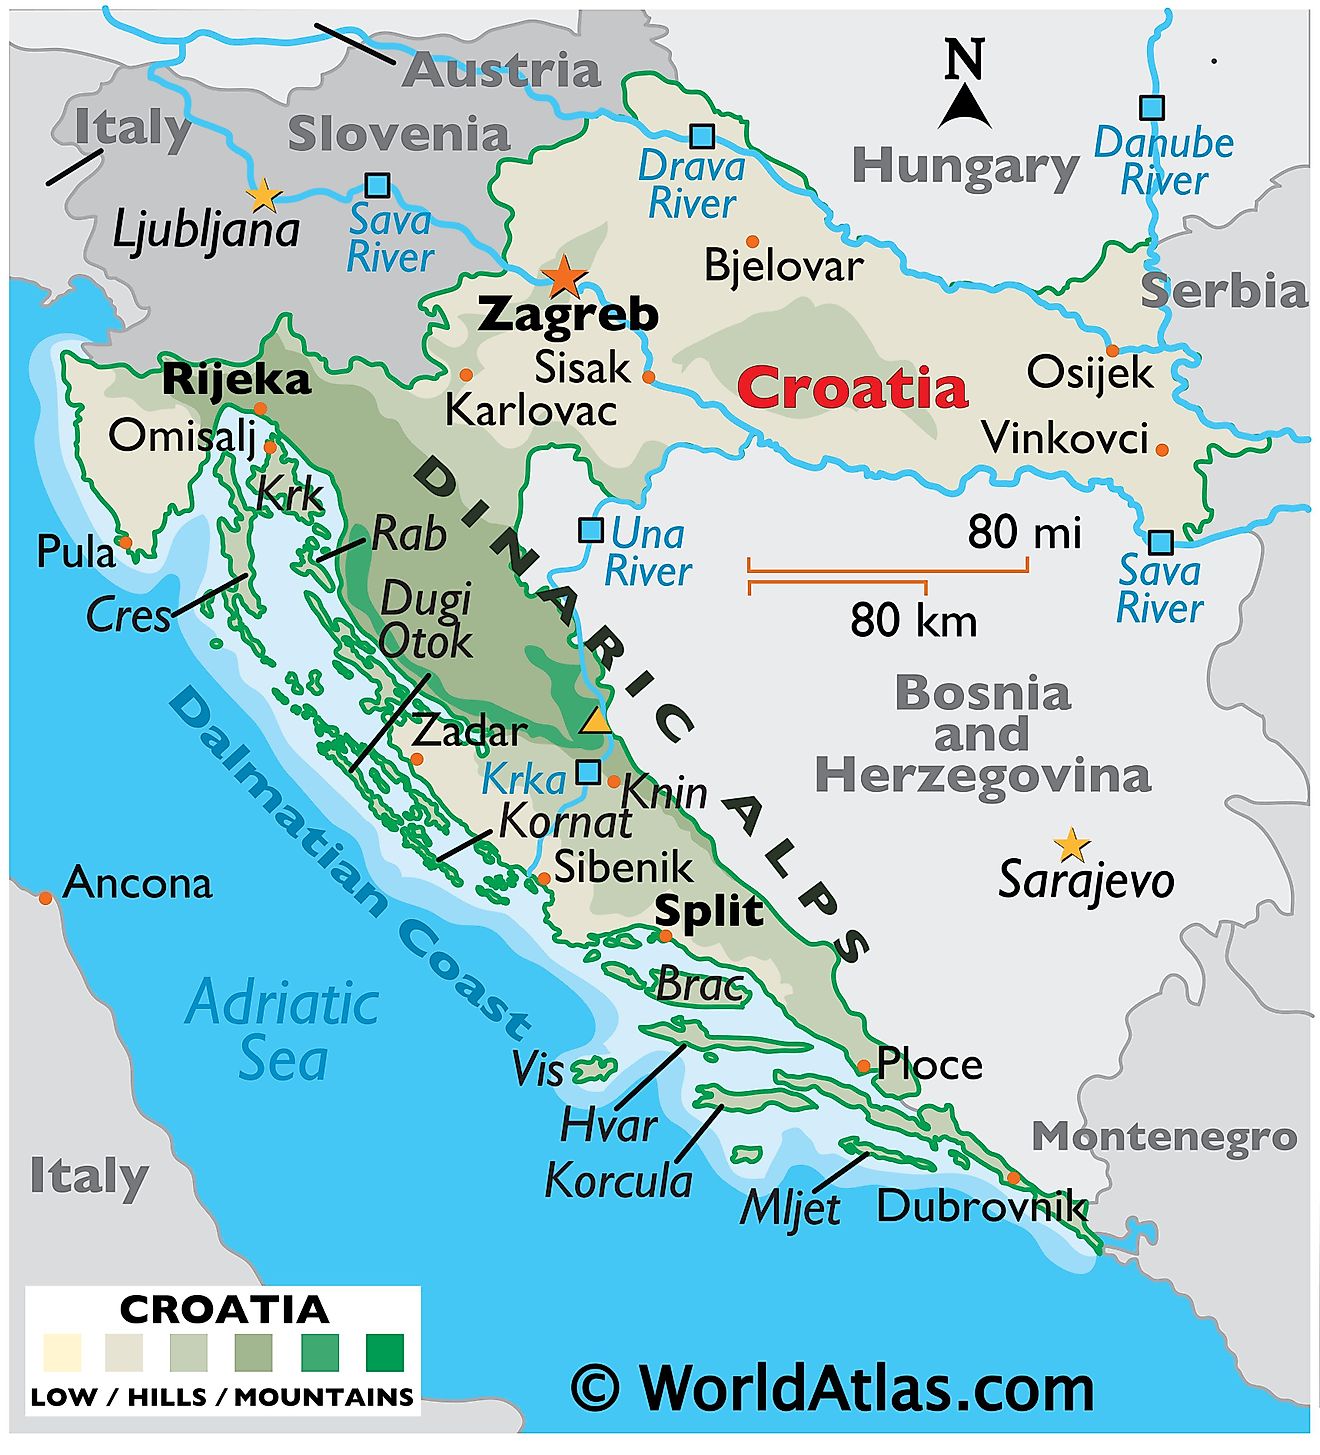 Croatia Maps & Facts - World Atlas